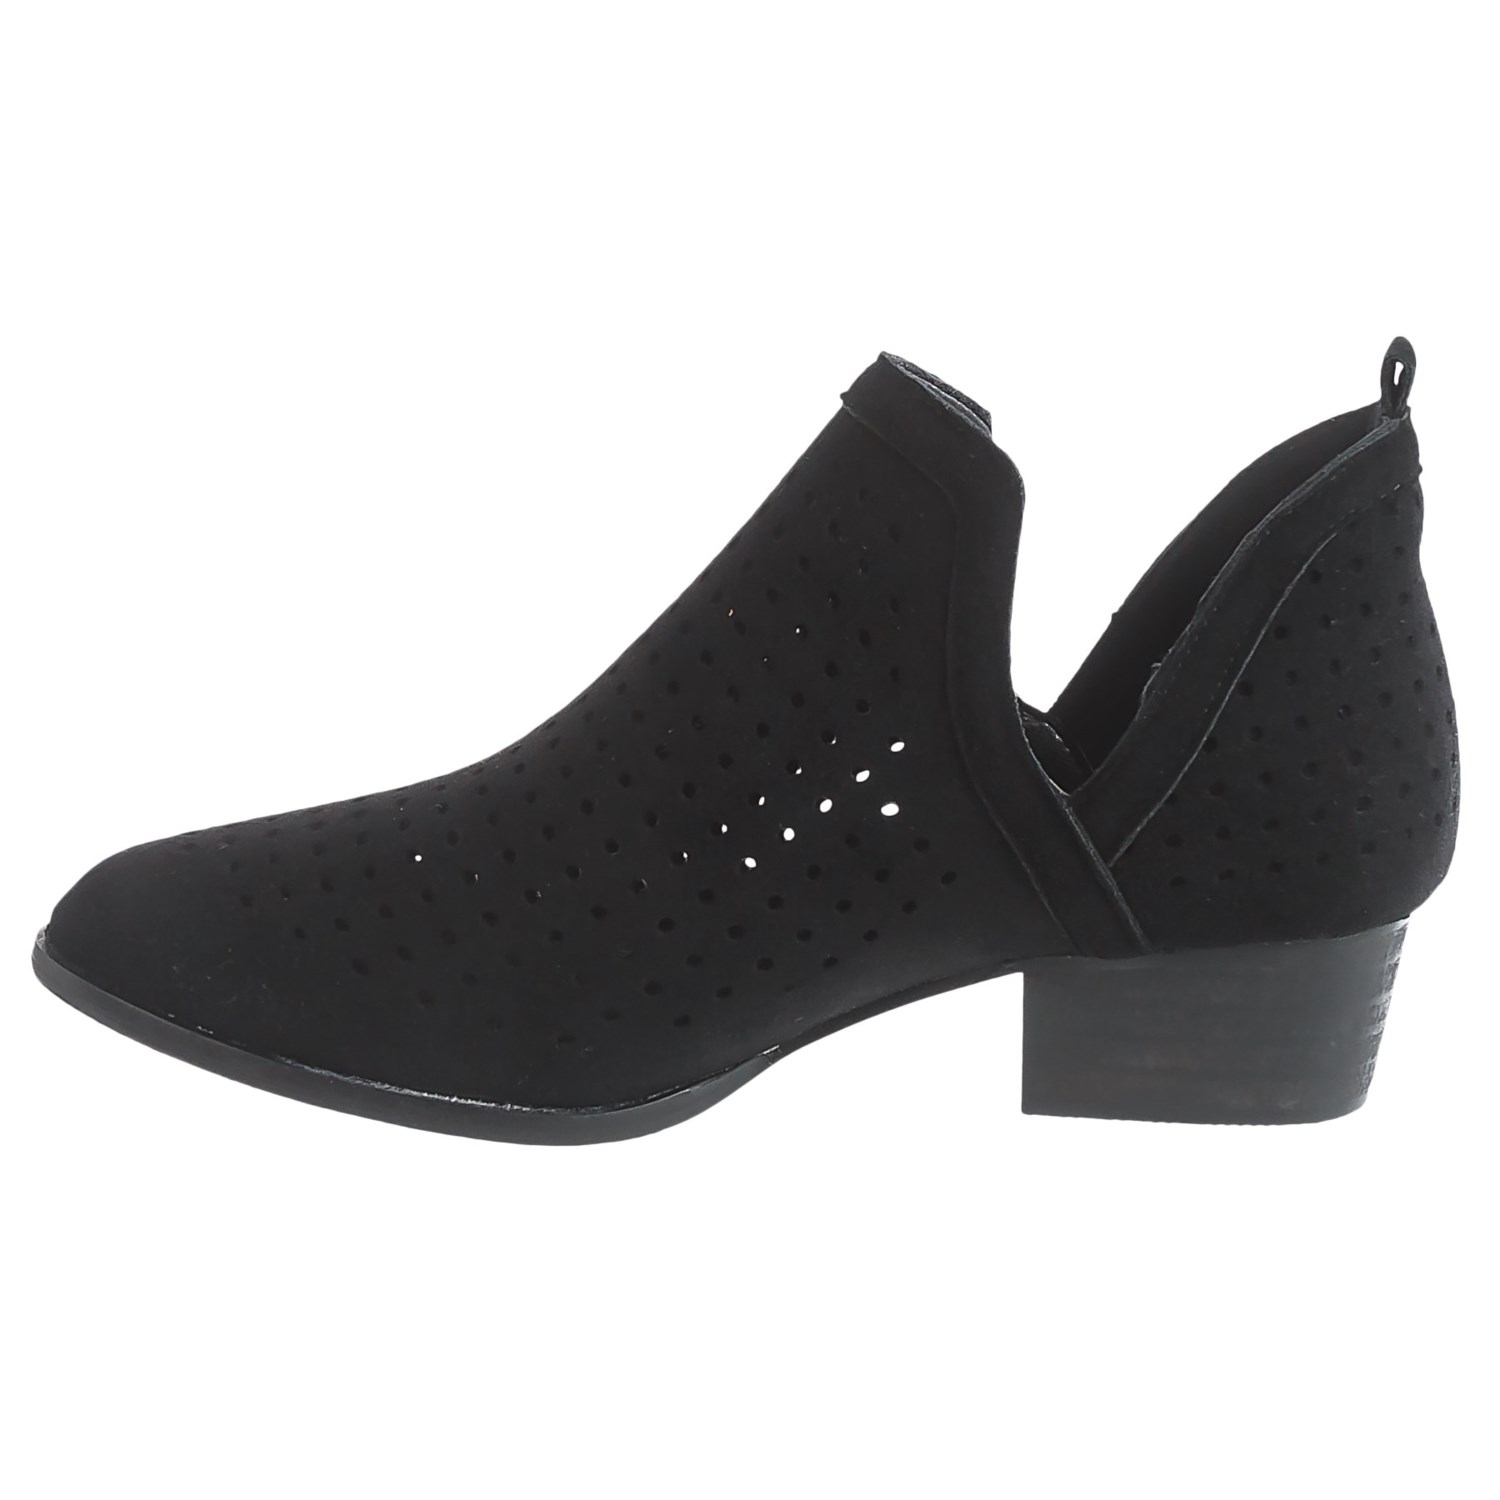 Yoki Paladino Ankle Boots (For Women) - Save 50%